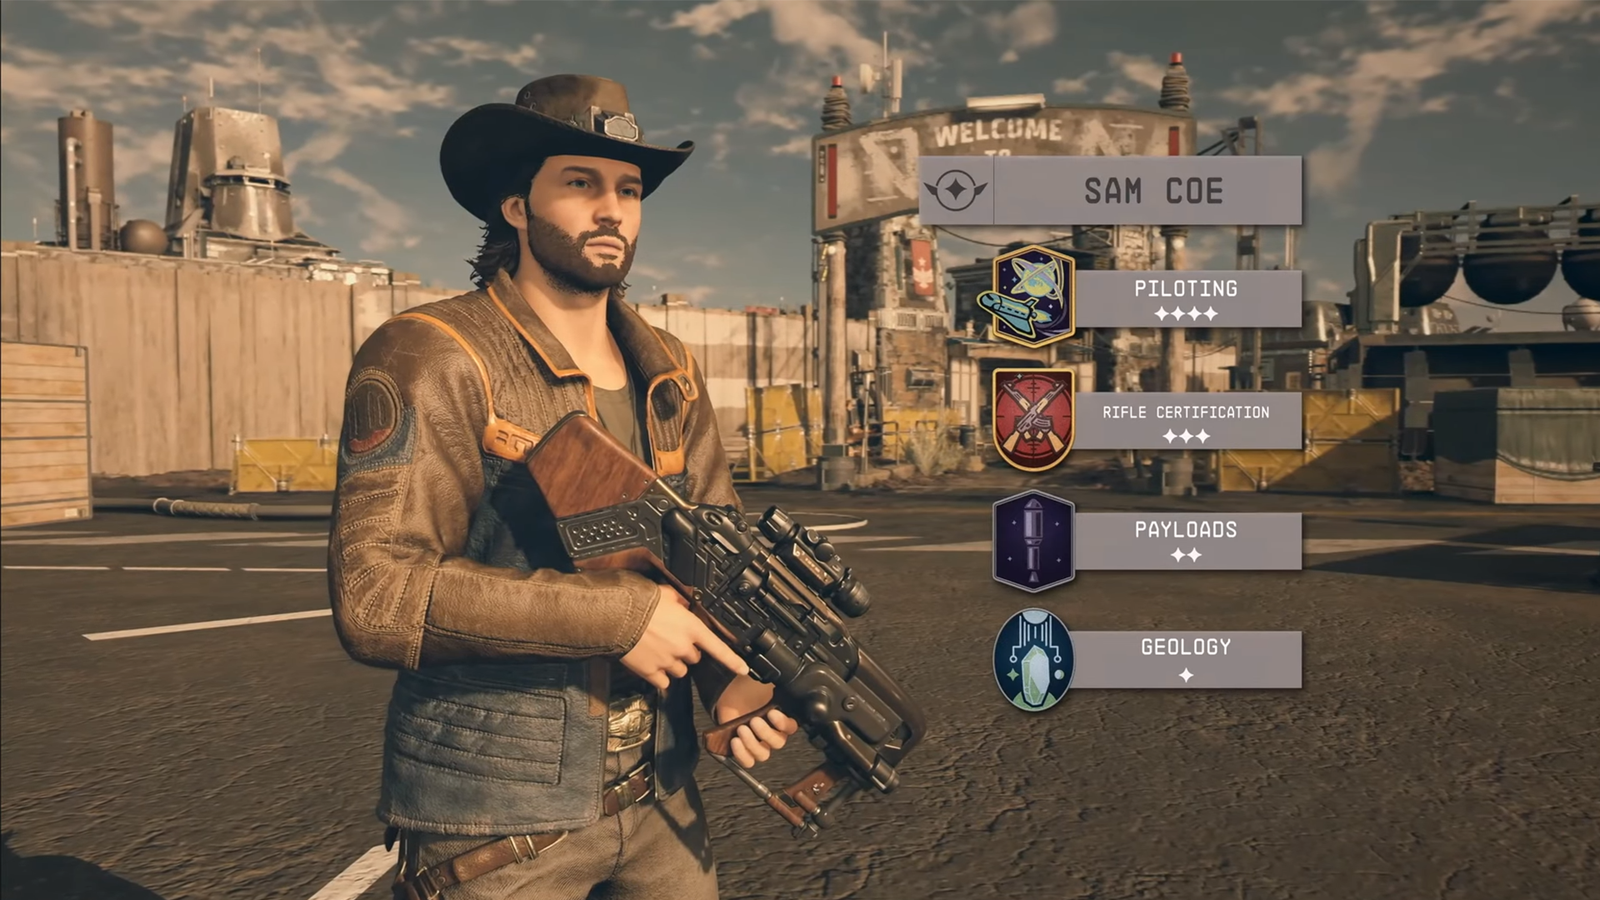 Starfield character Sam Coe in cowboy gear holding a gun